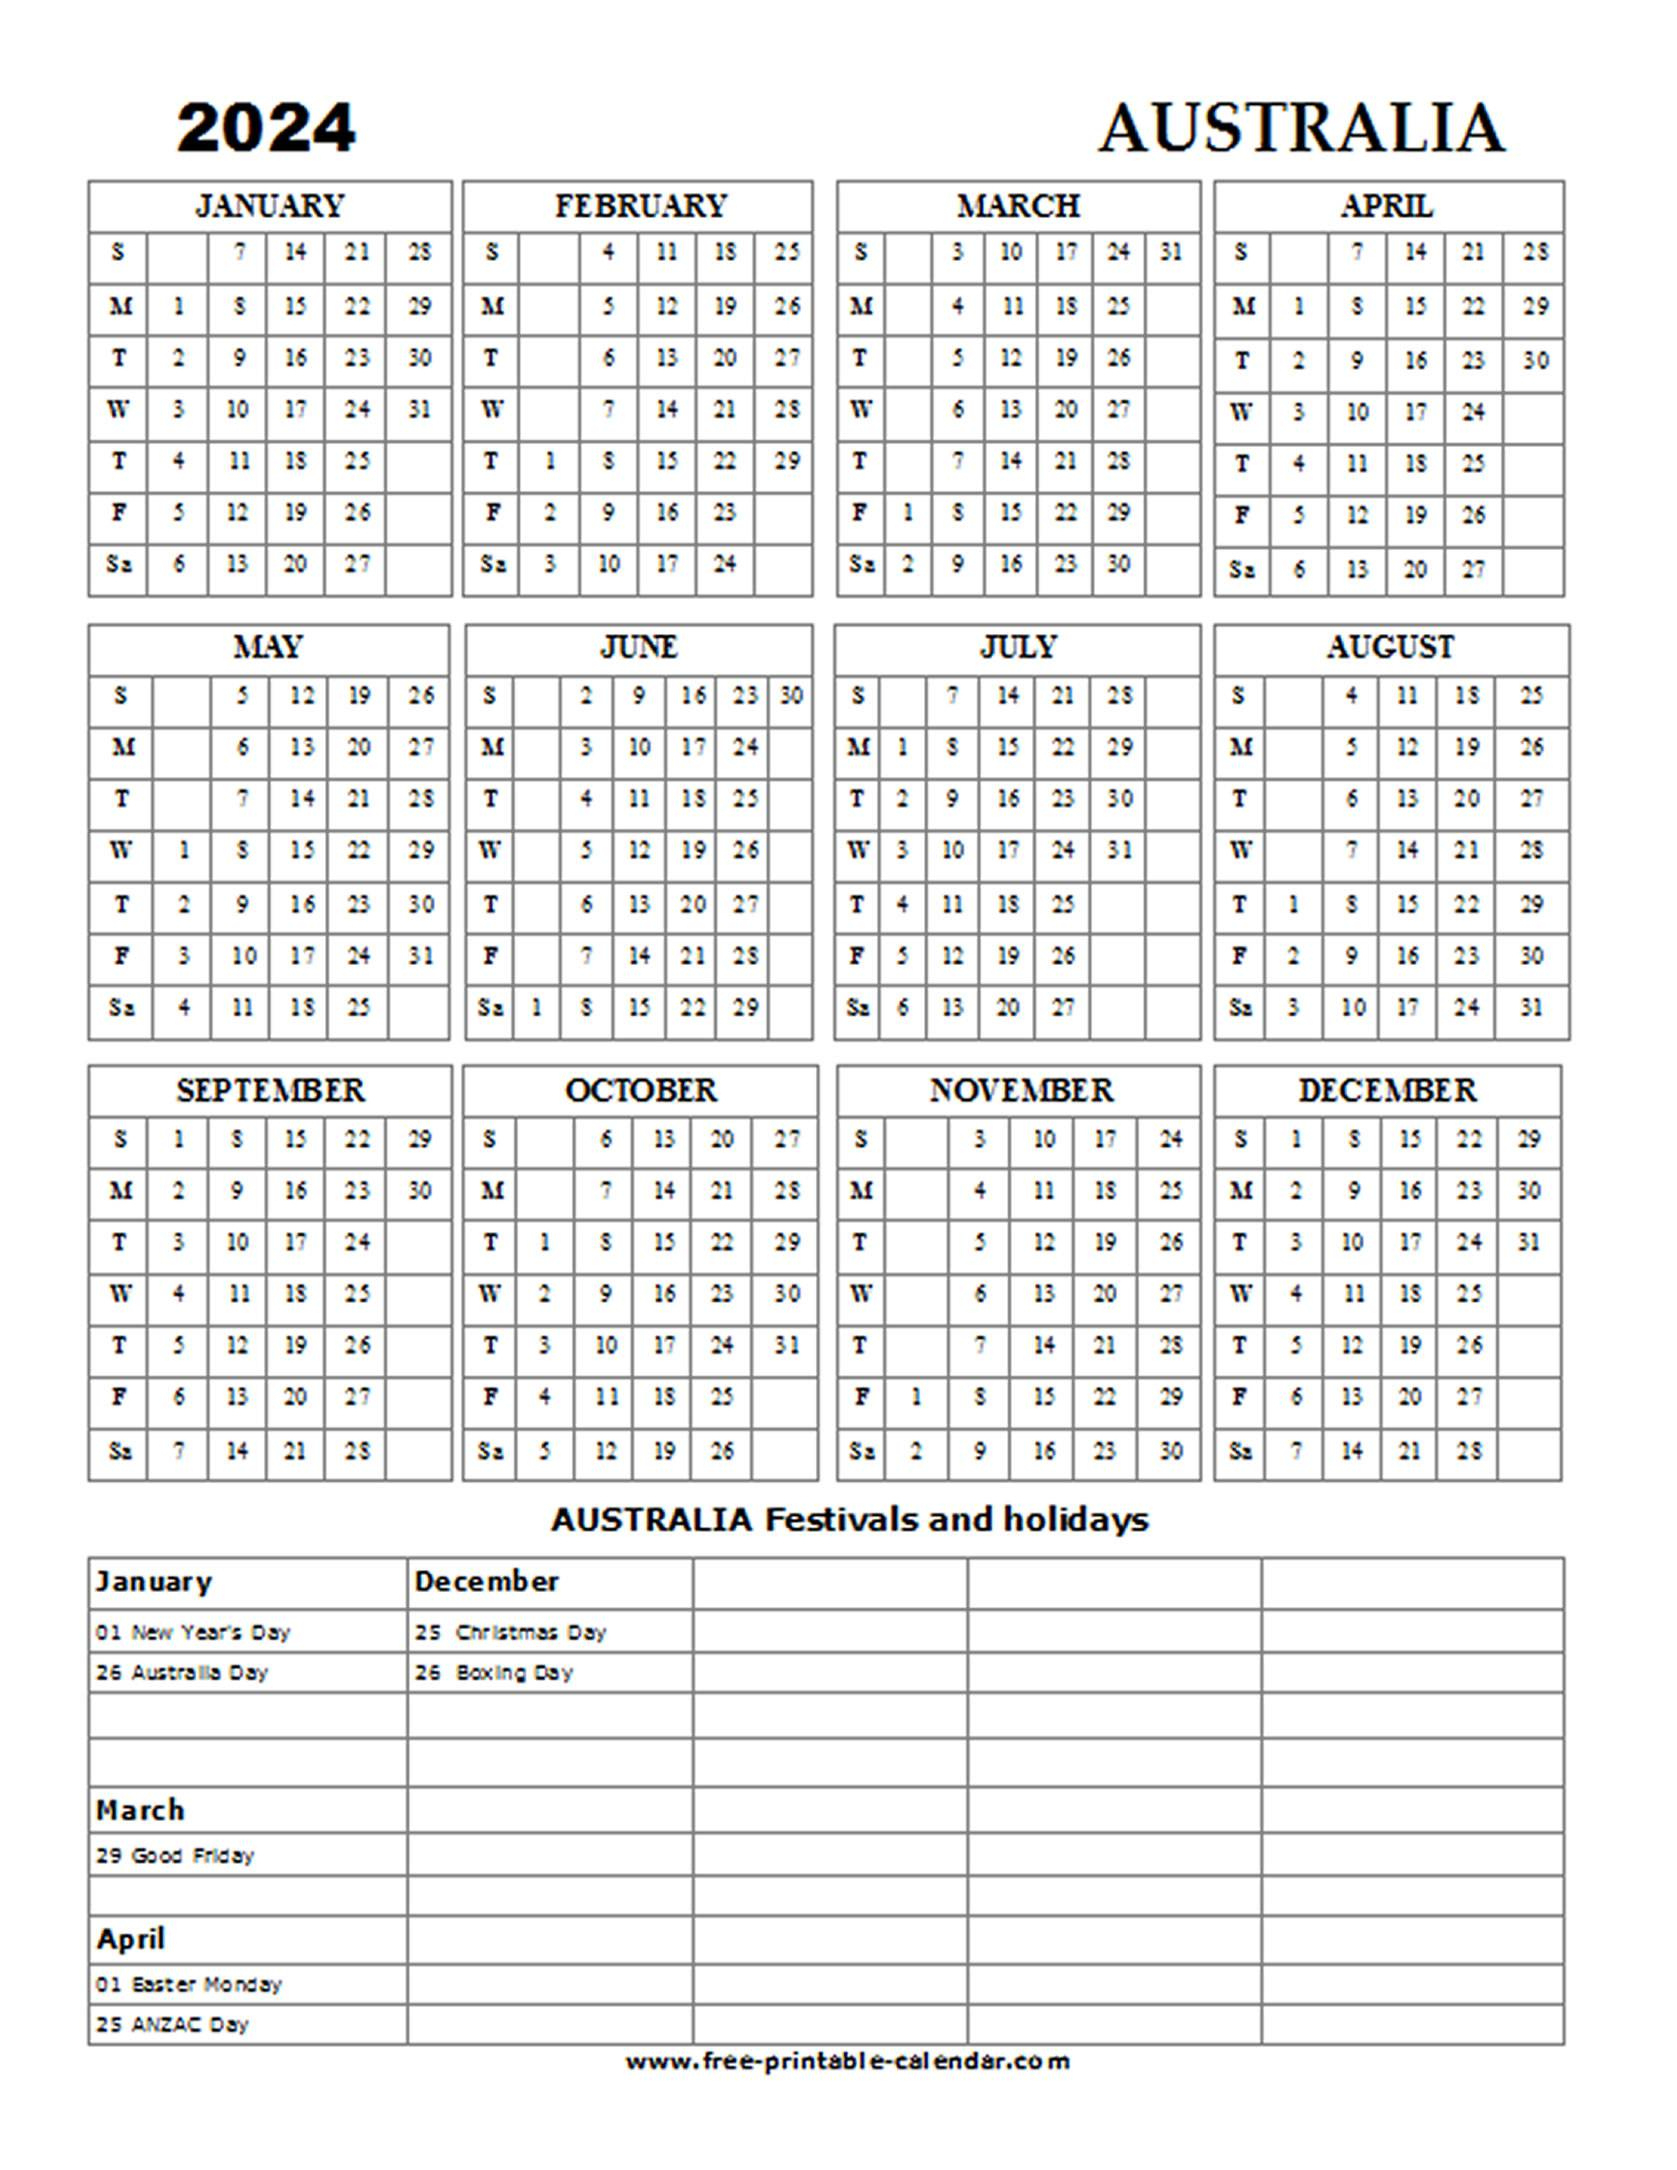 2024 Australia Holiday Calendar - Free-Printable-Calendar | Printable Calendar 2024 Australia Free